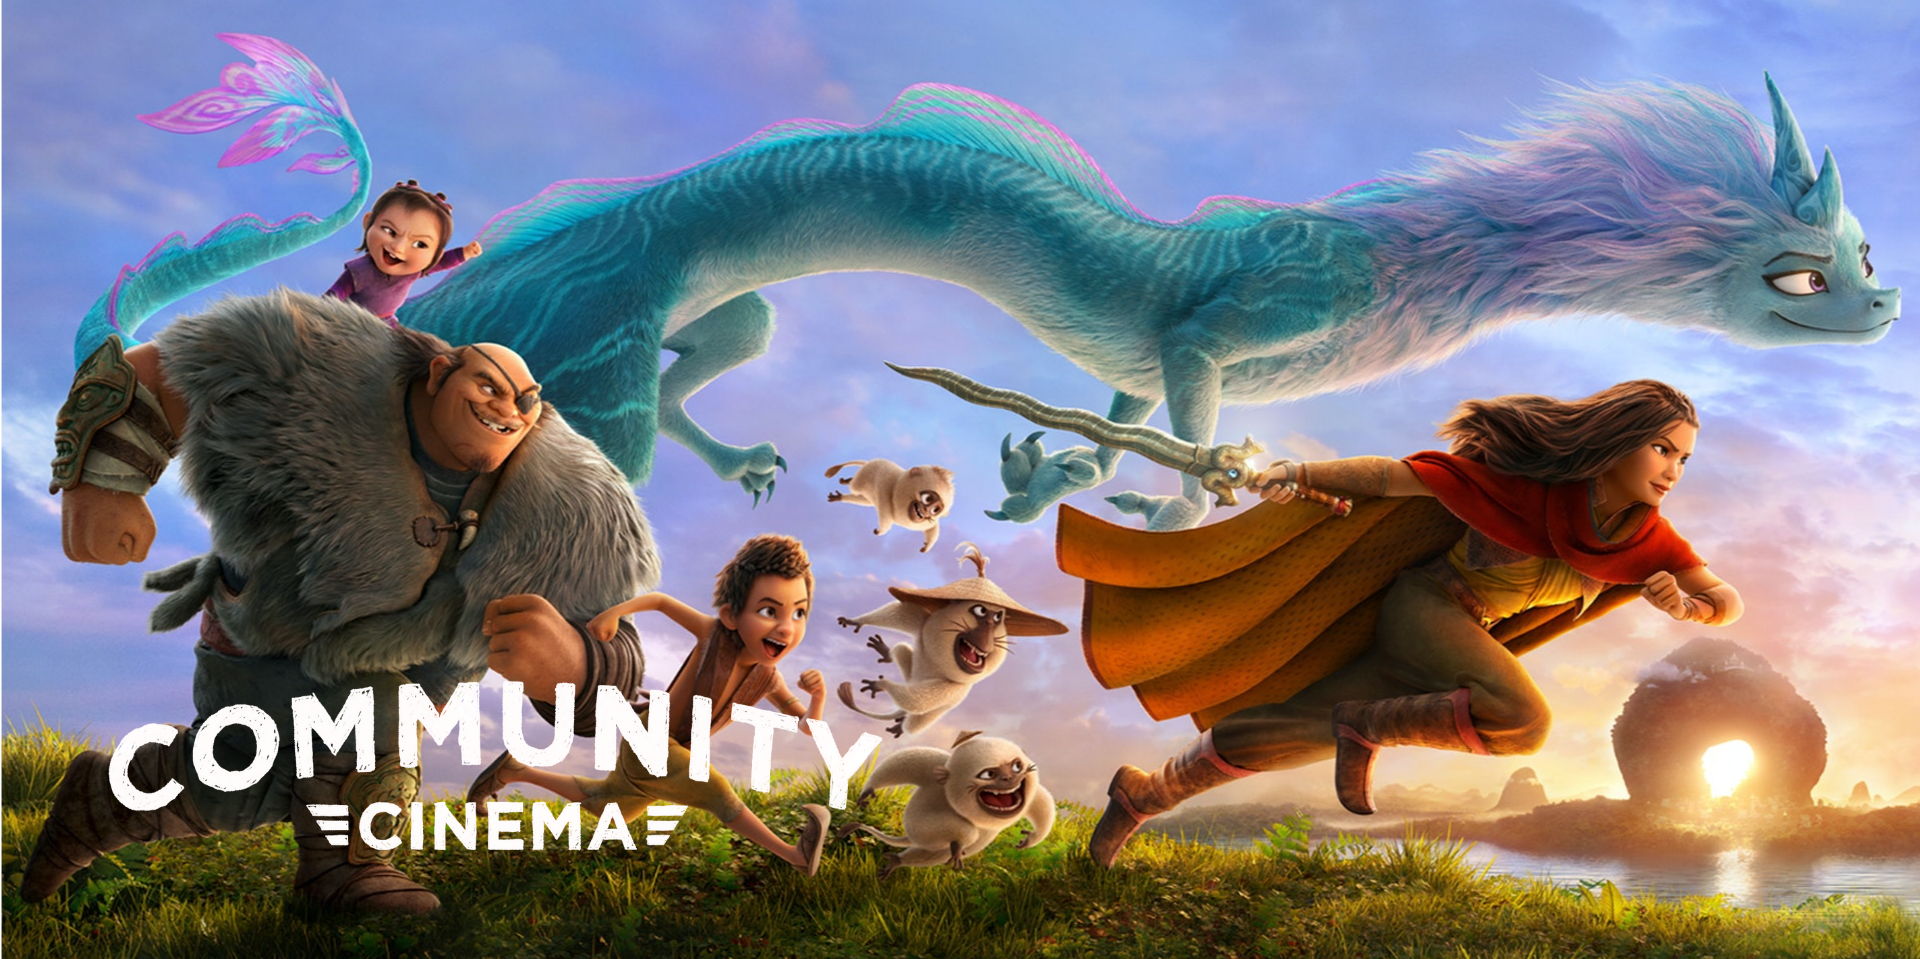 Raya & The Last Dragon (2021) - Community Cinema & Amphitheater promotional image